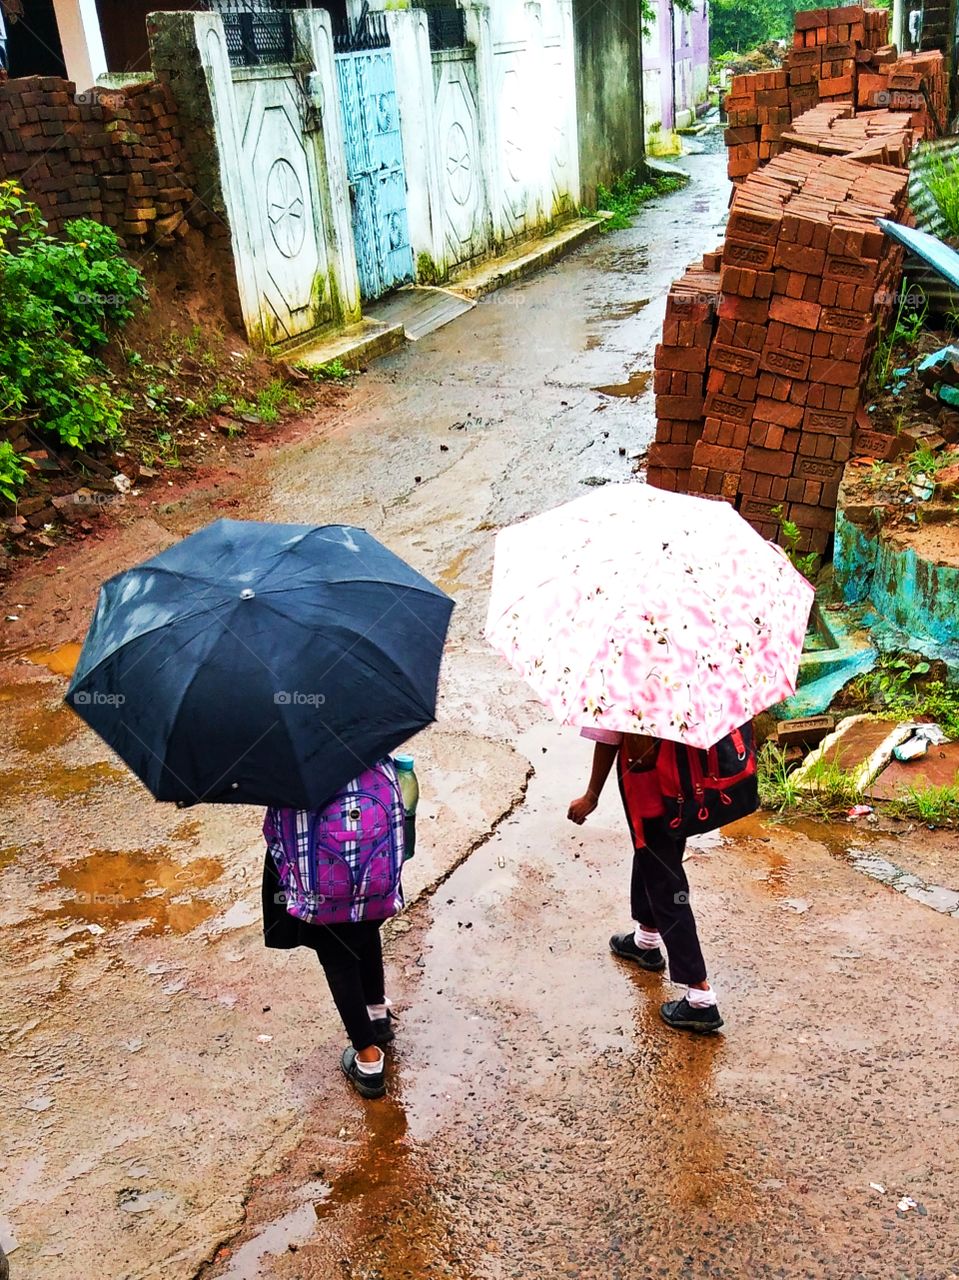 Children go to school with umbrellas during rainy days